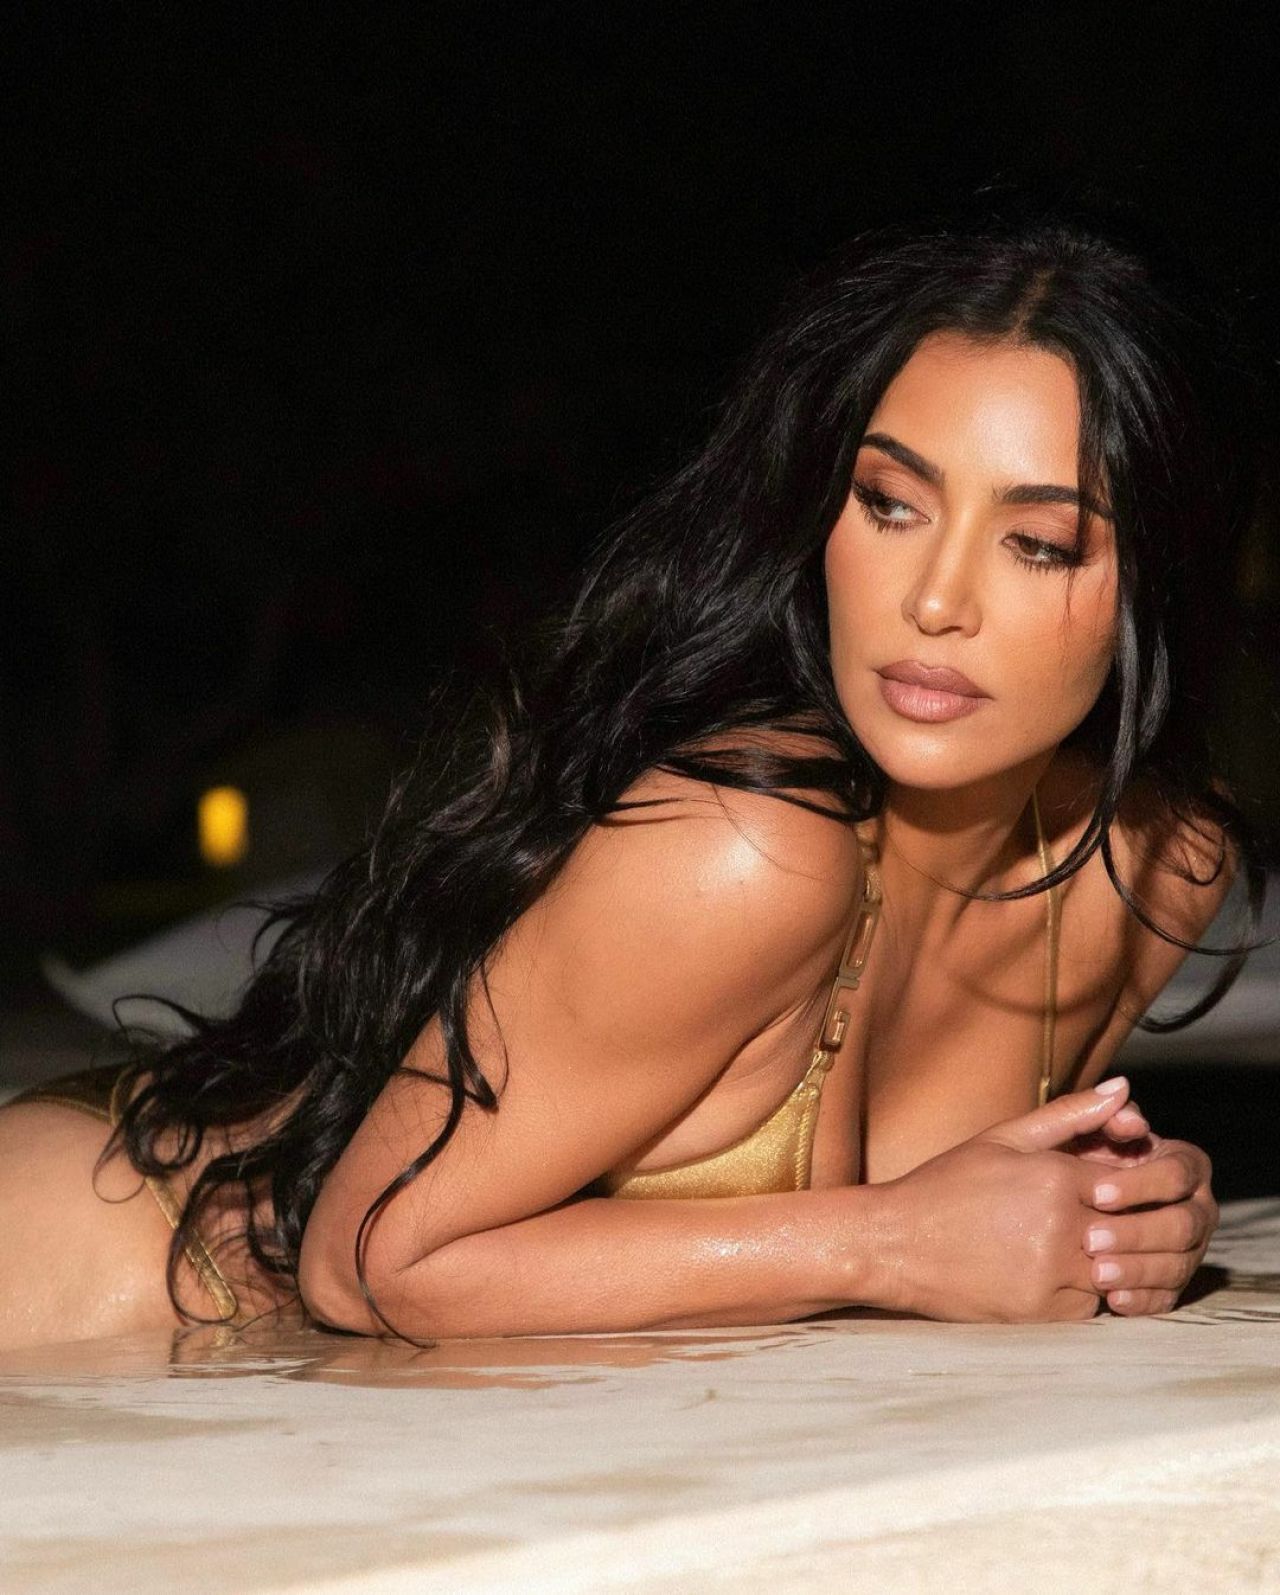 Kim Kardashian's Fans Say She Looks 'Unrecognizable' In An